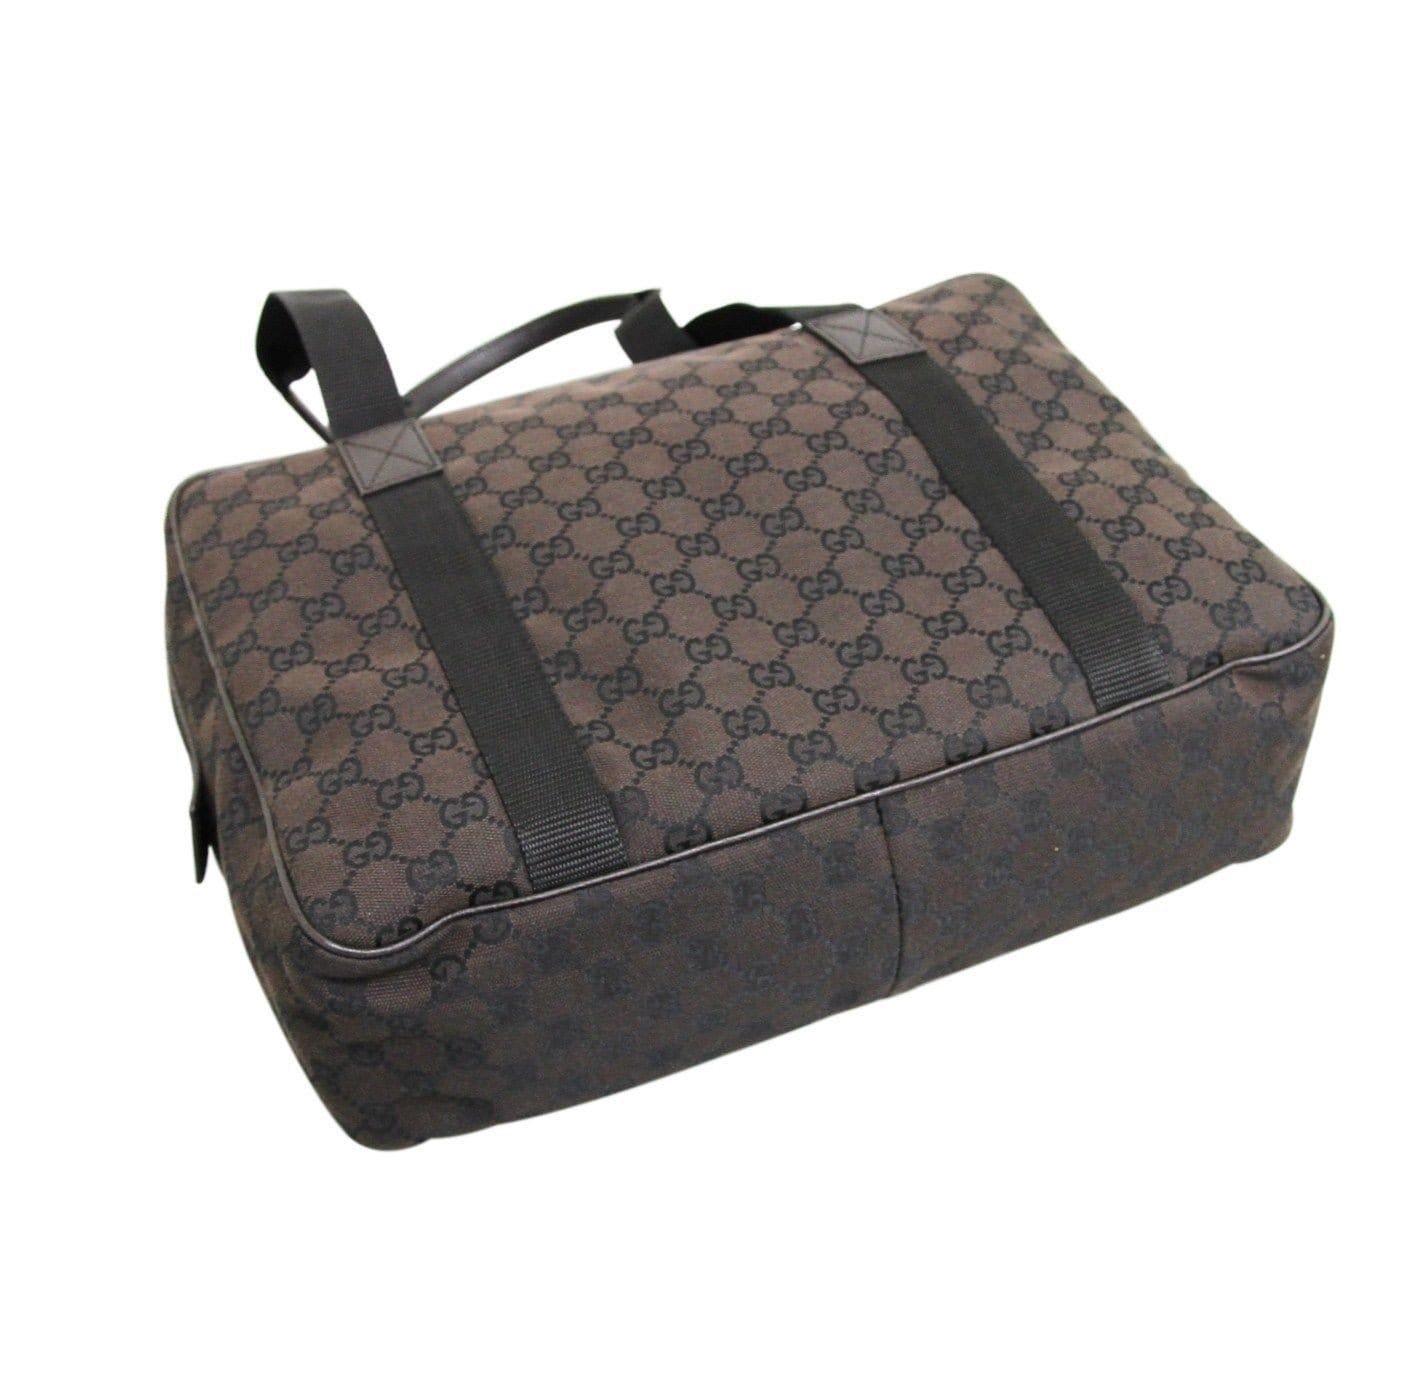 Gucci 282529 Unisex Brown Canvas Shoulder Laptop Bag Tote Handbag - Fi